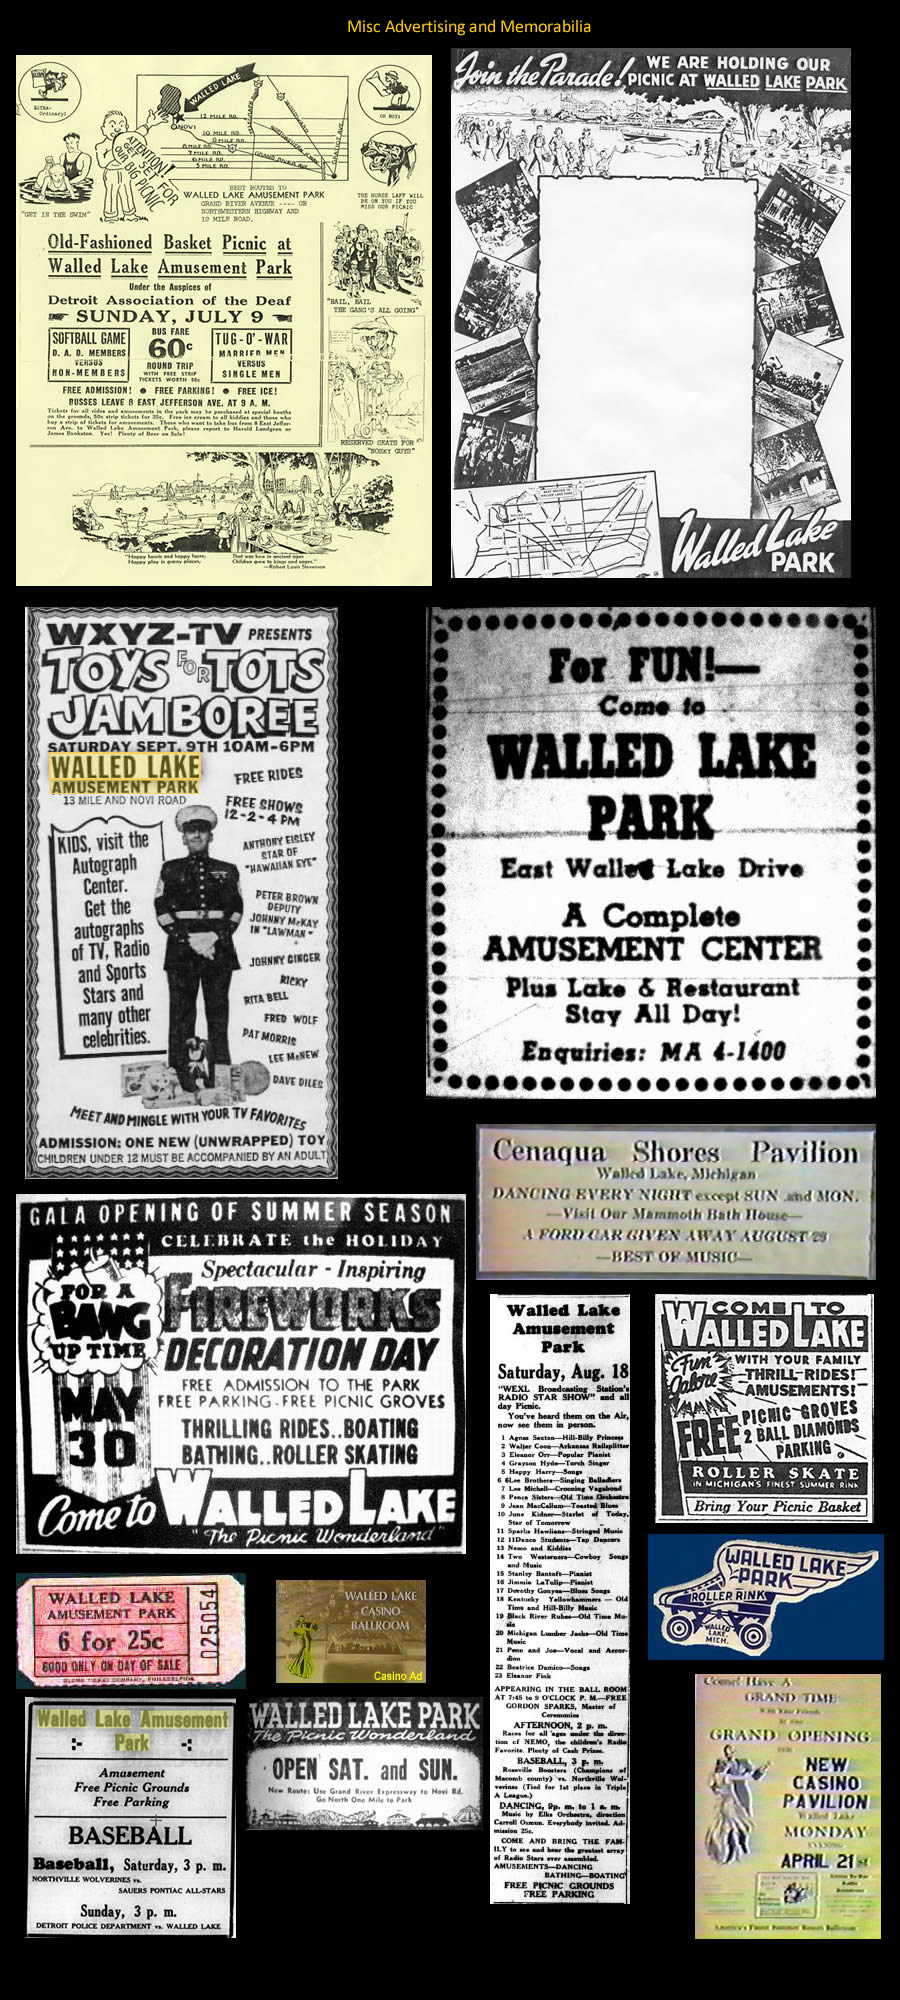 Walled Lake Amusement Park - ADS AND MEMORABILIA